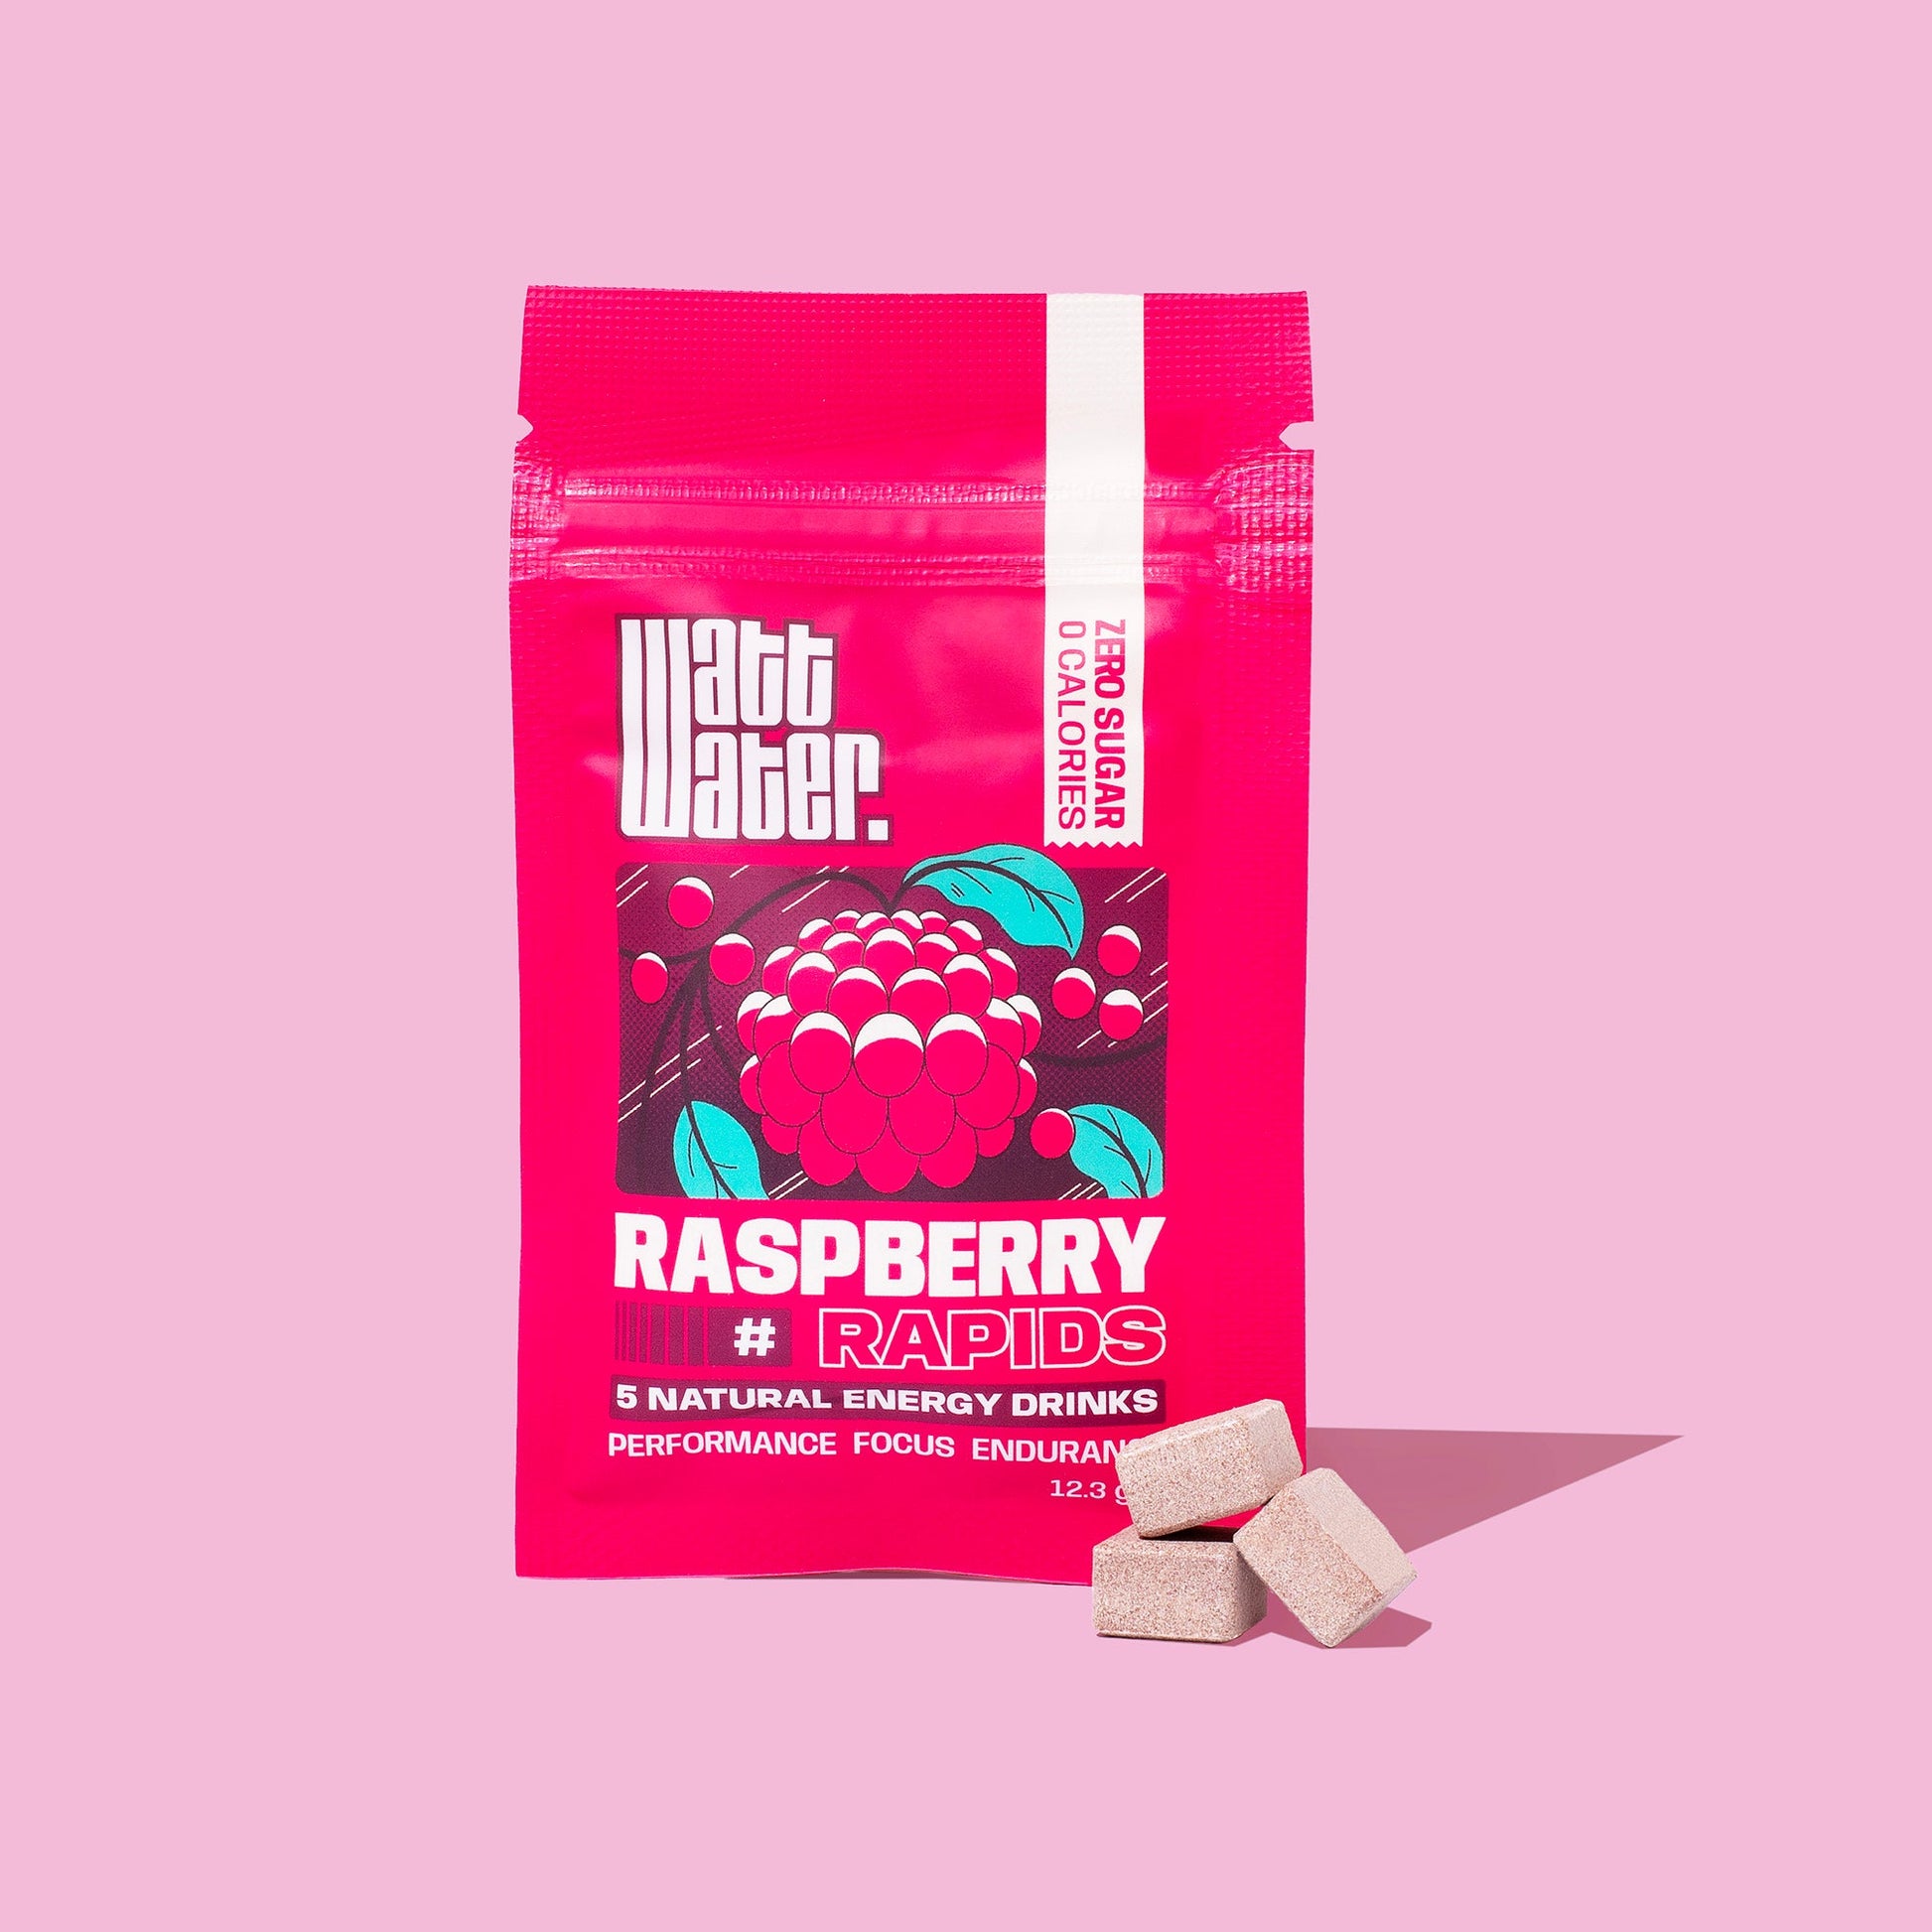 Raspberry rapids pack